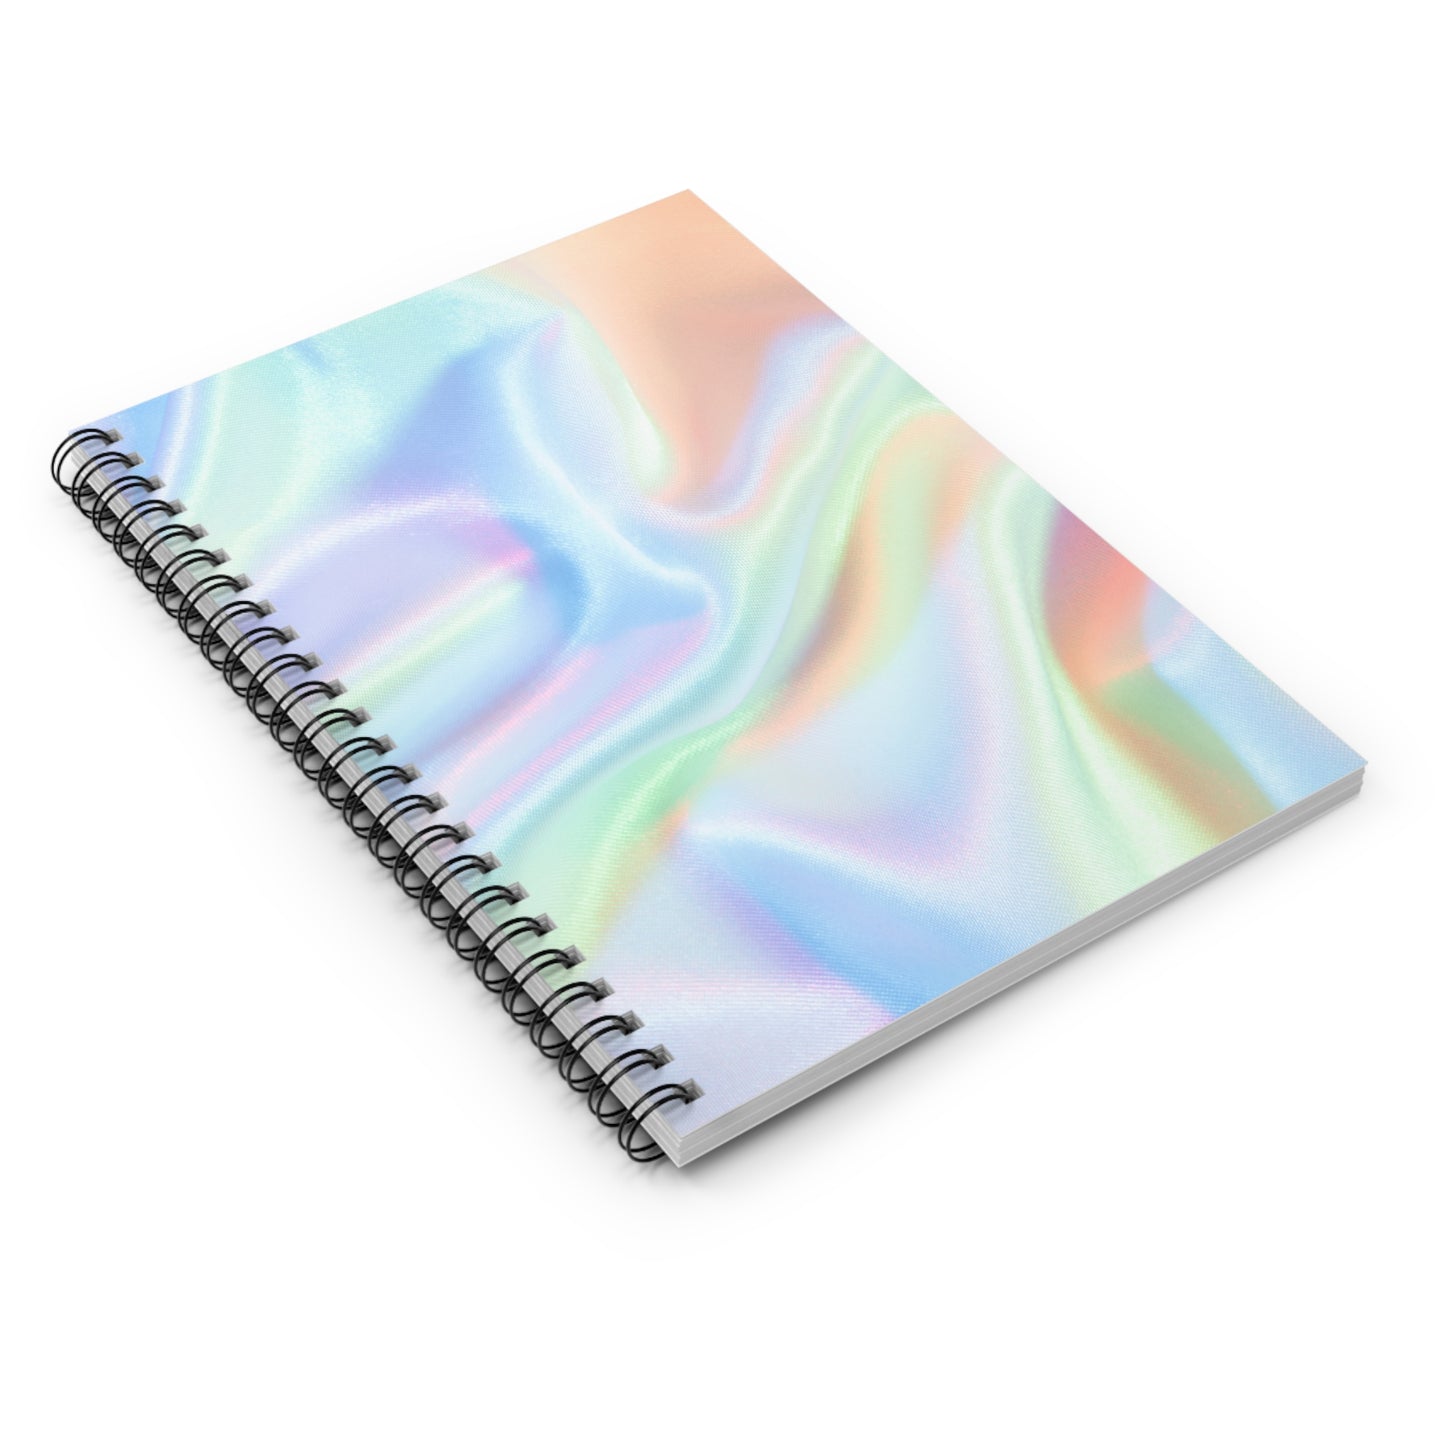 Vibrant Mosaics - The Alien Spiral Notebook (Ruled Line)